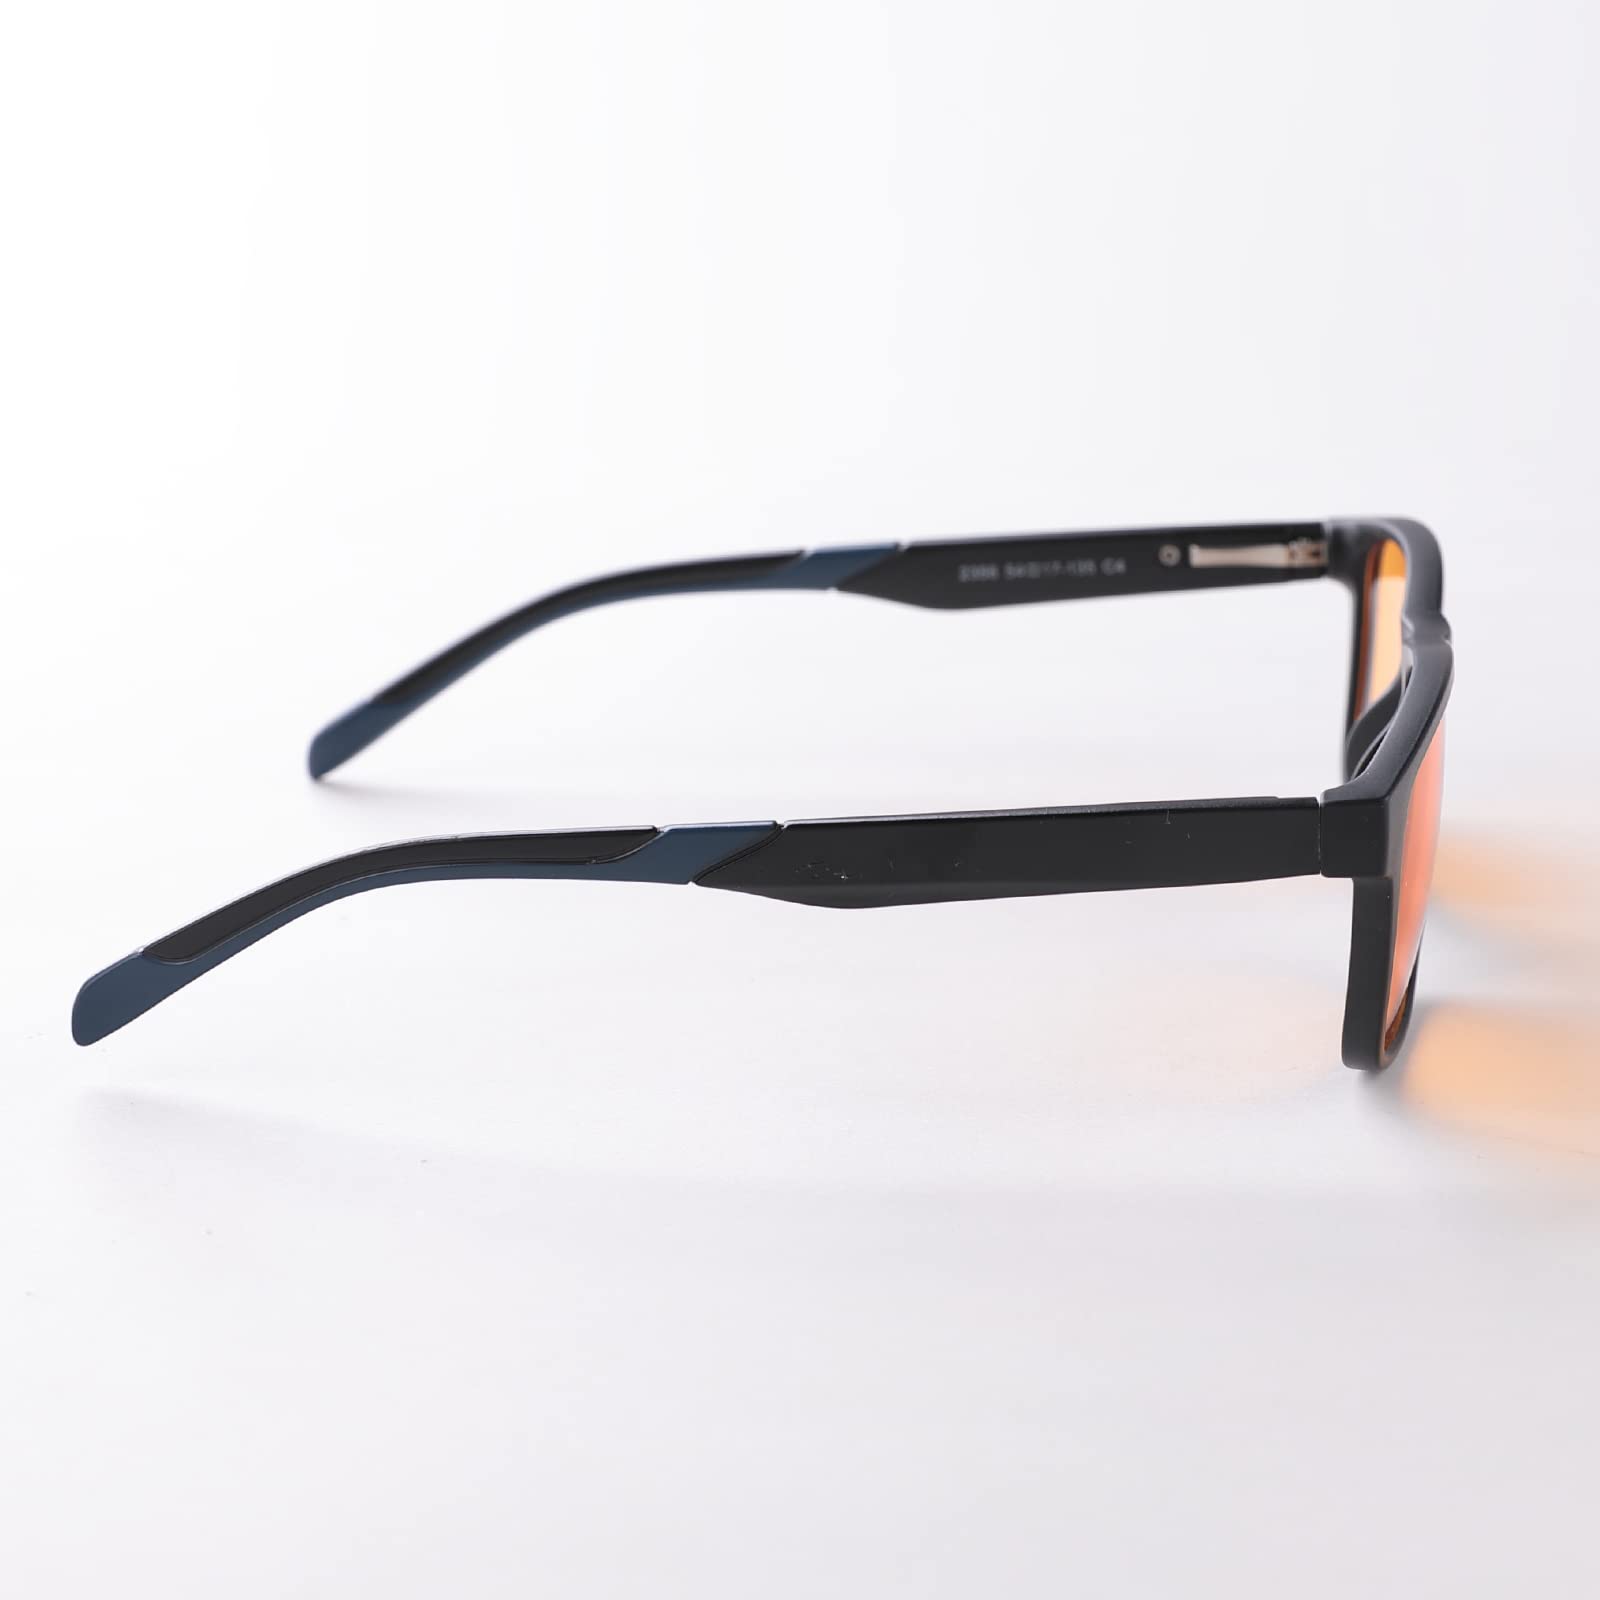 Intellilens Gaming Glasses Black 56-17-140 (Style 1)